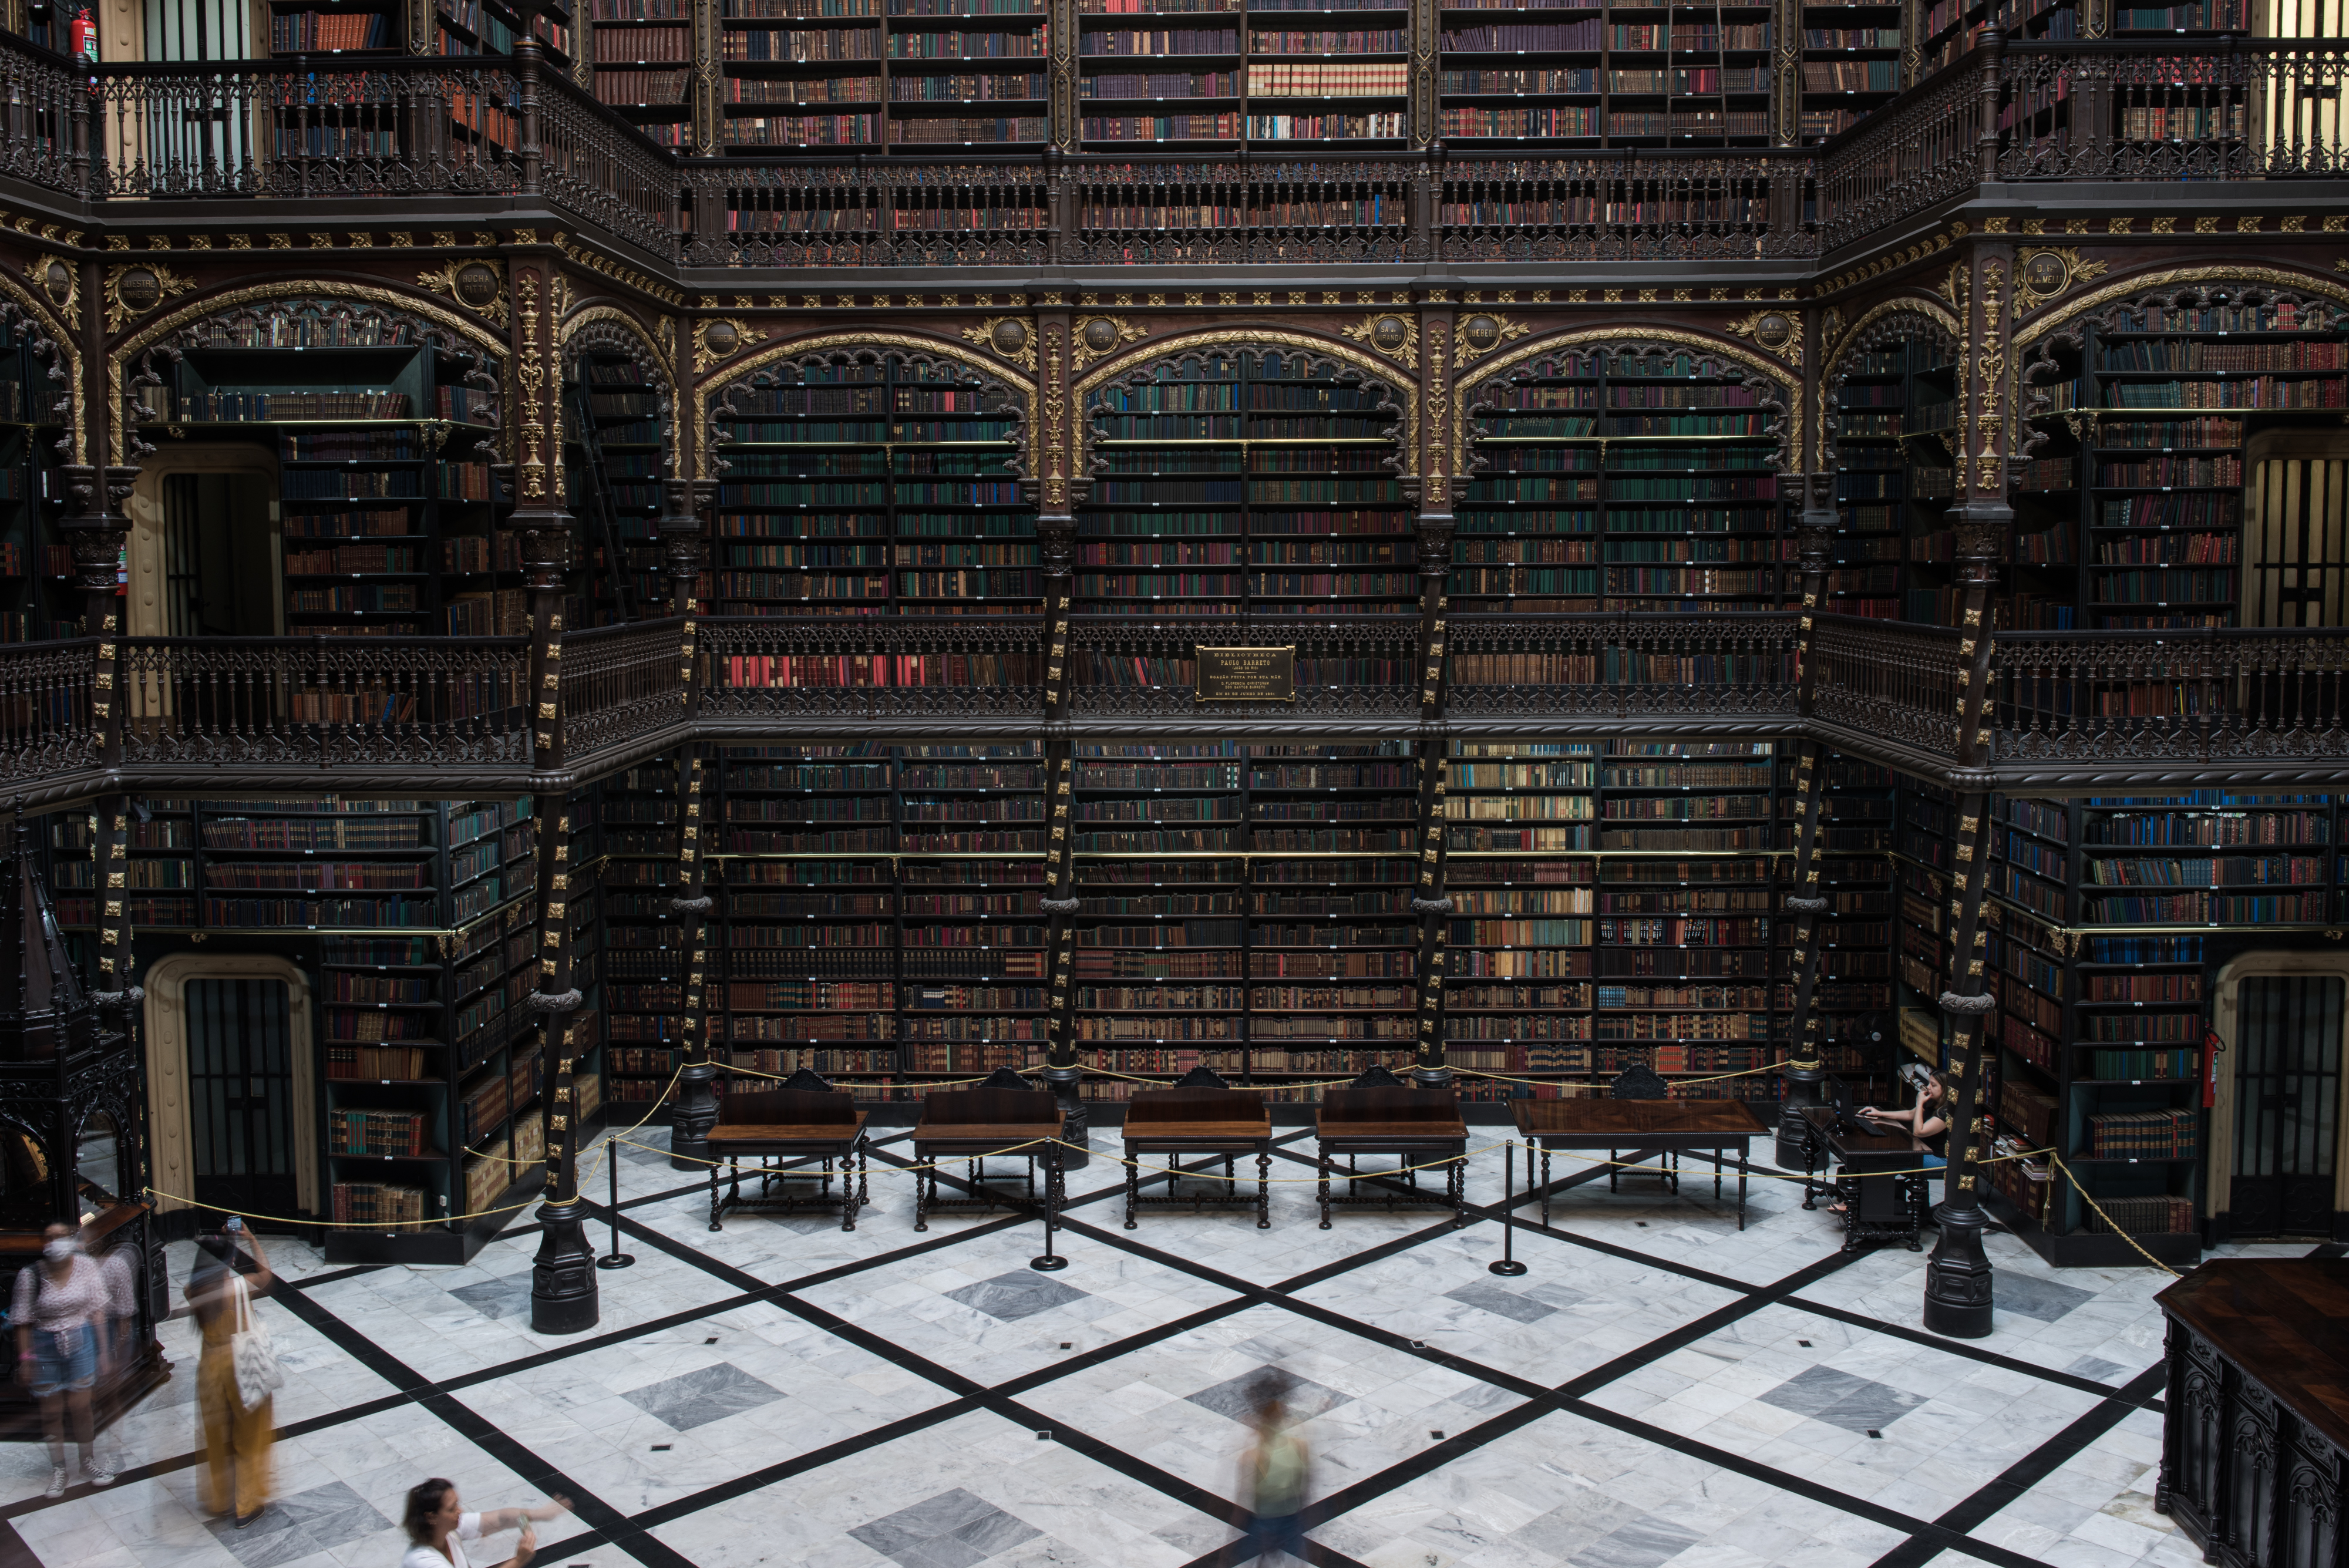 Real Gabinete Portugués de Lectura: Brazil's most beautiful library goes  viral | Culture | EL PAÍS English Edition